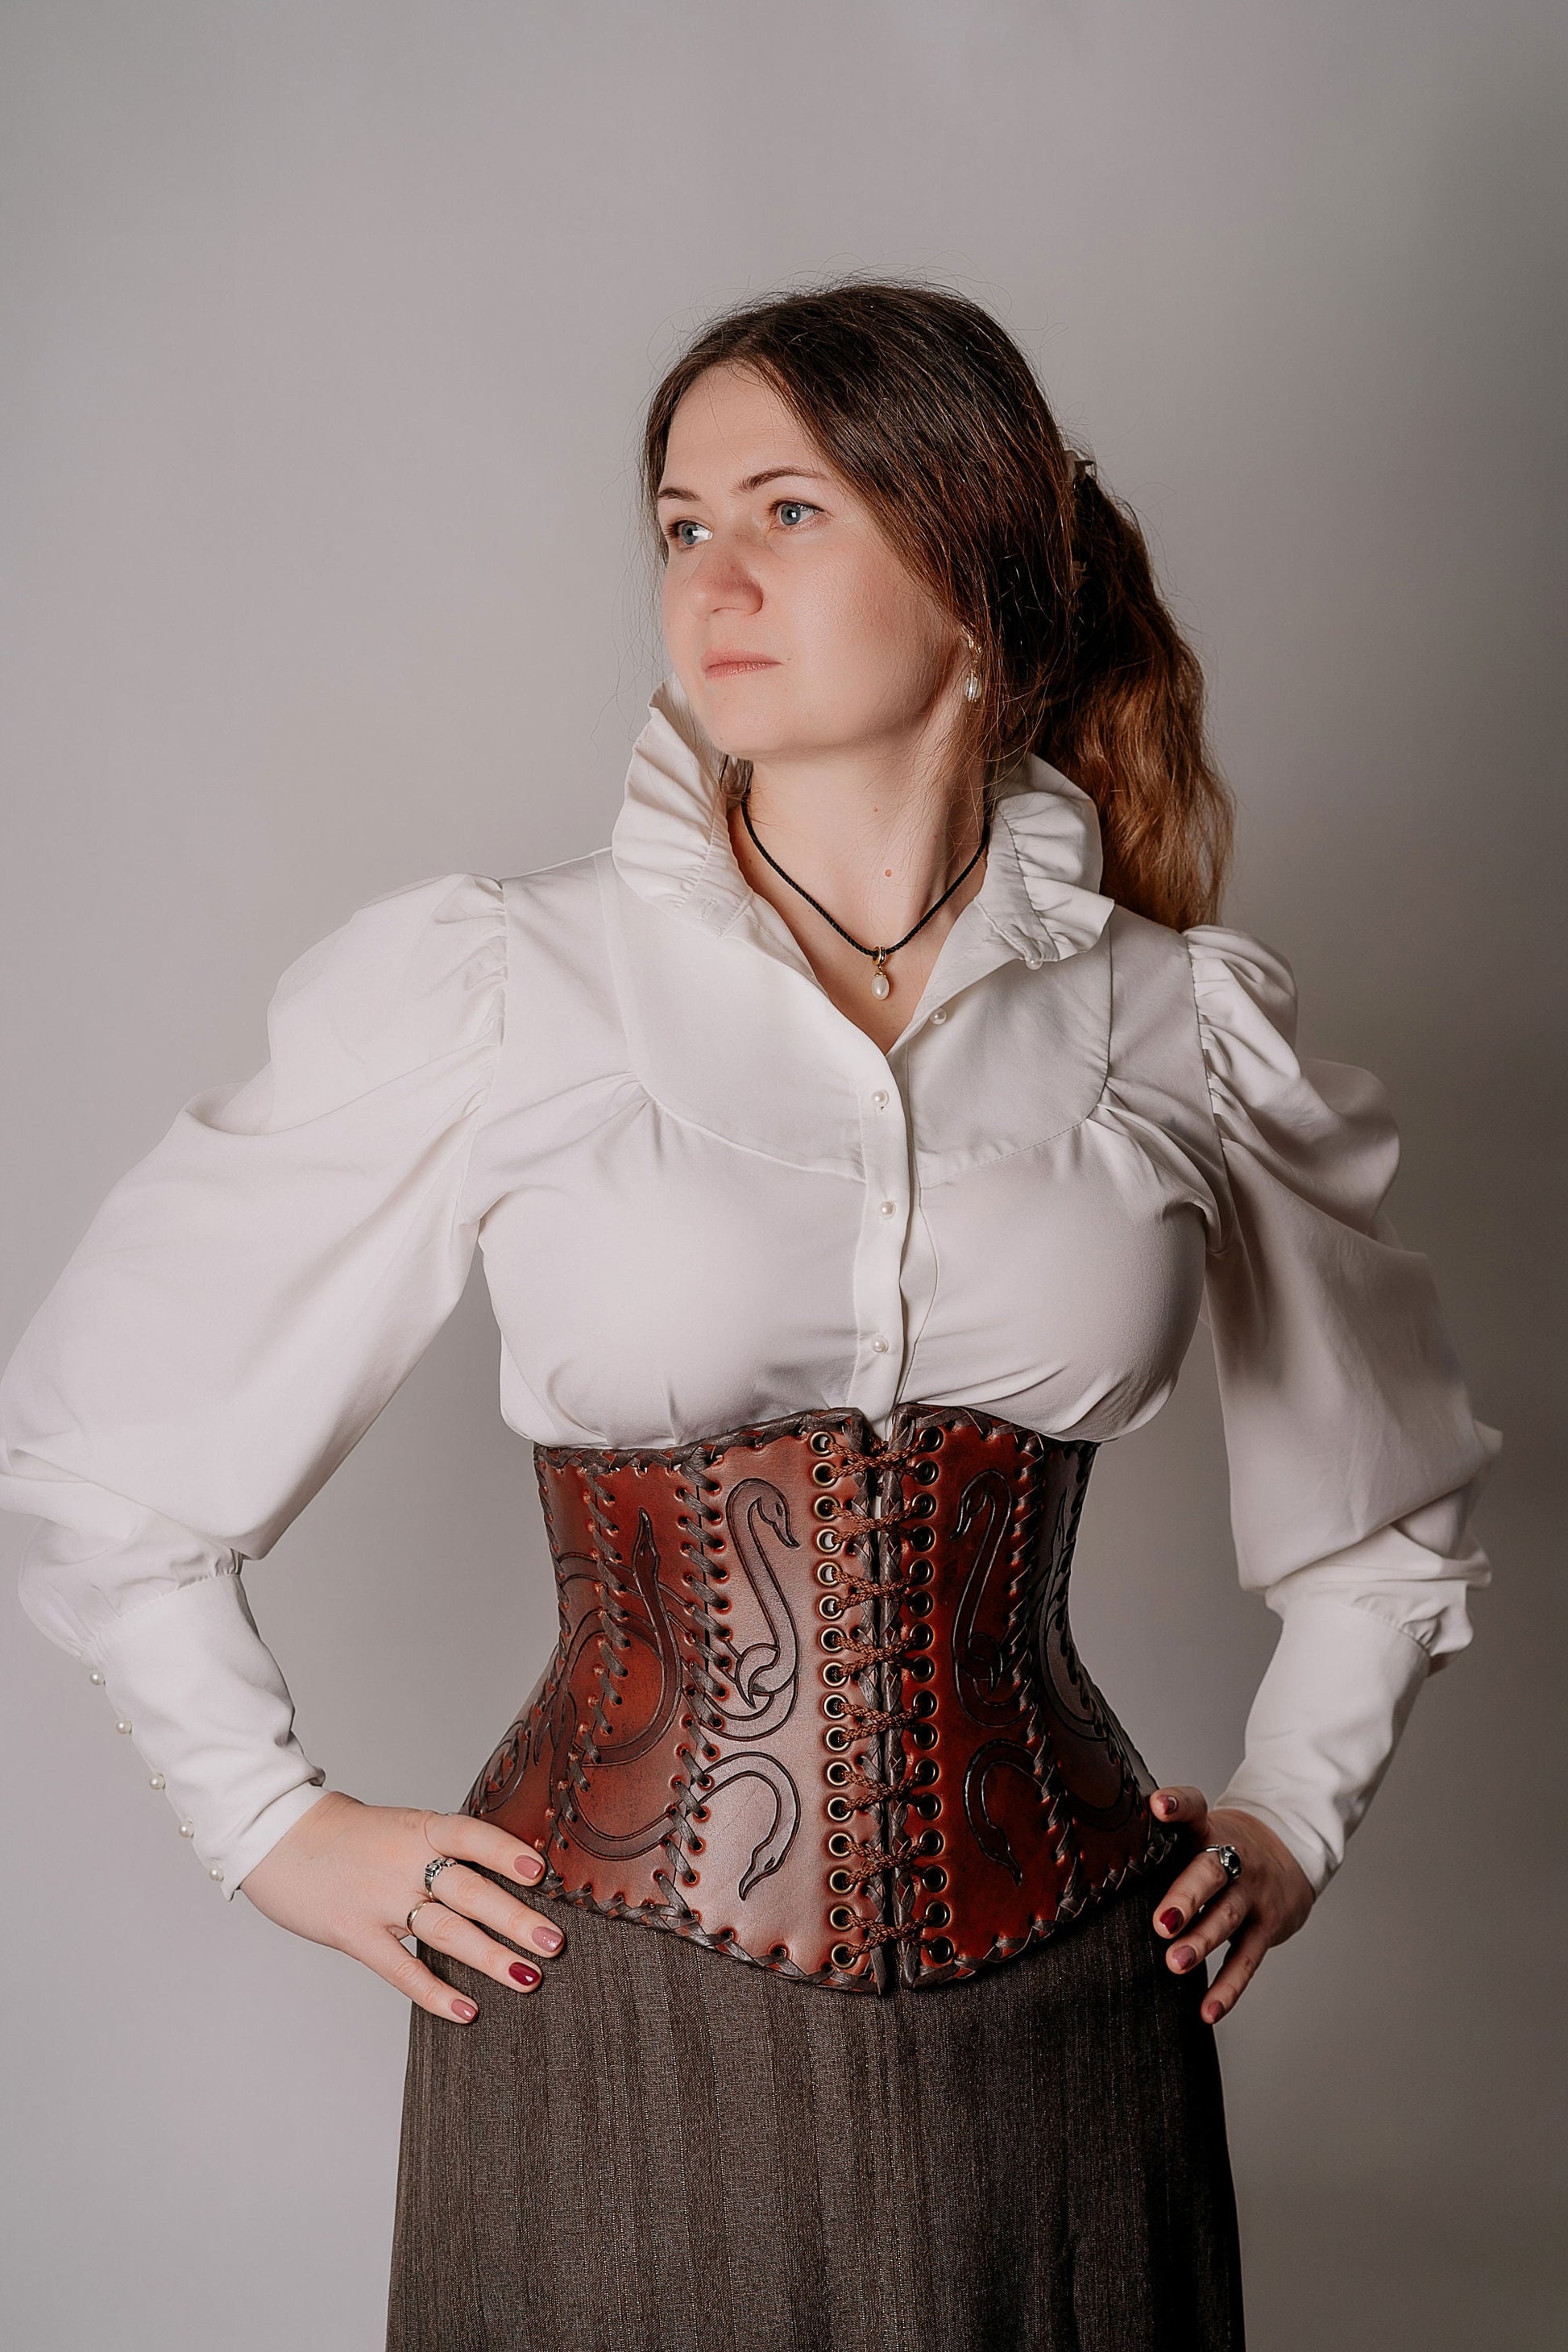 Leather Corset Hand Stitched Cosplay Underbust LARP Renaissance Fair  Medieval Dress -  Canada